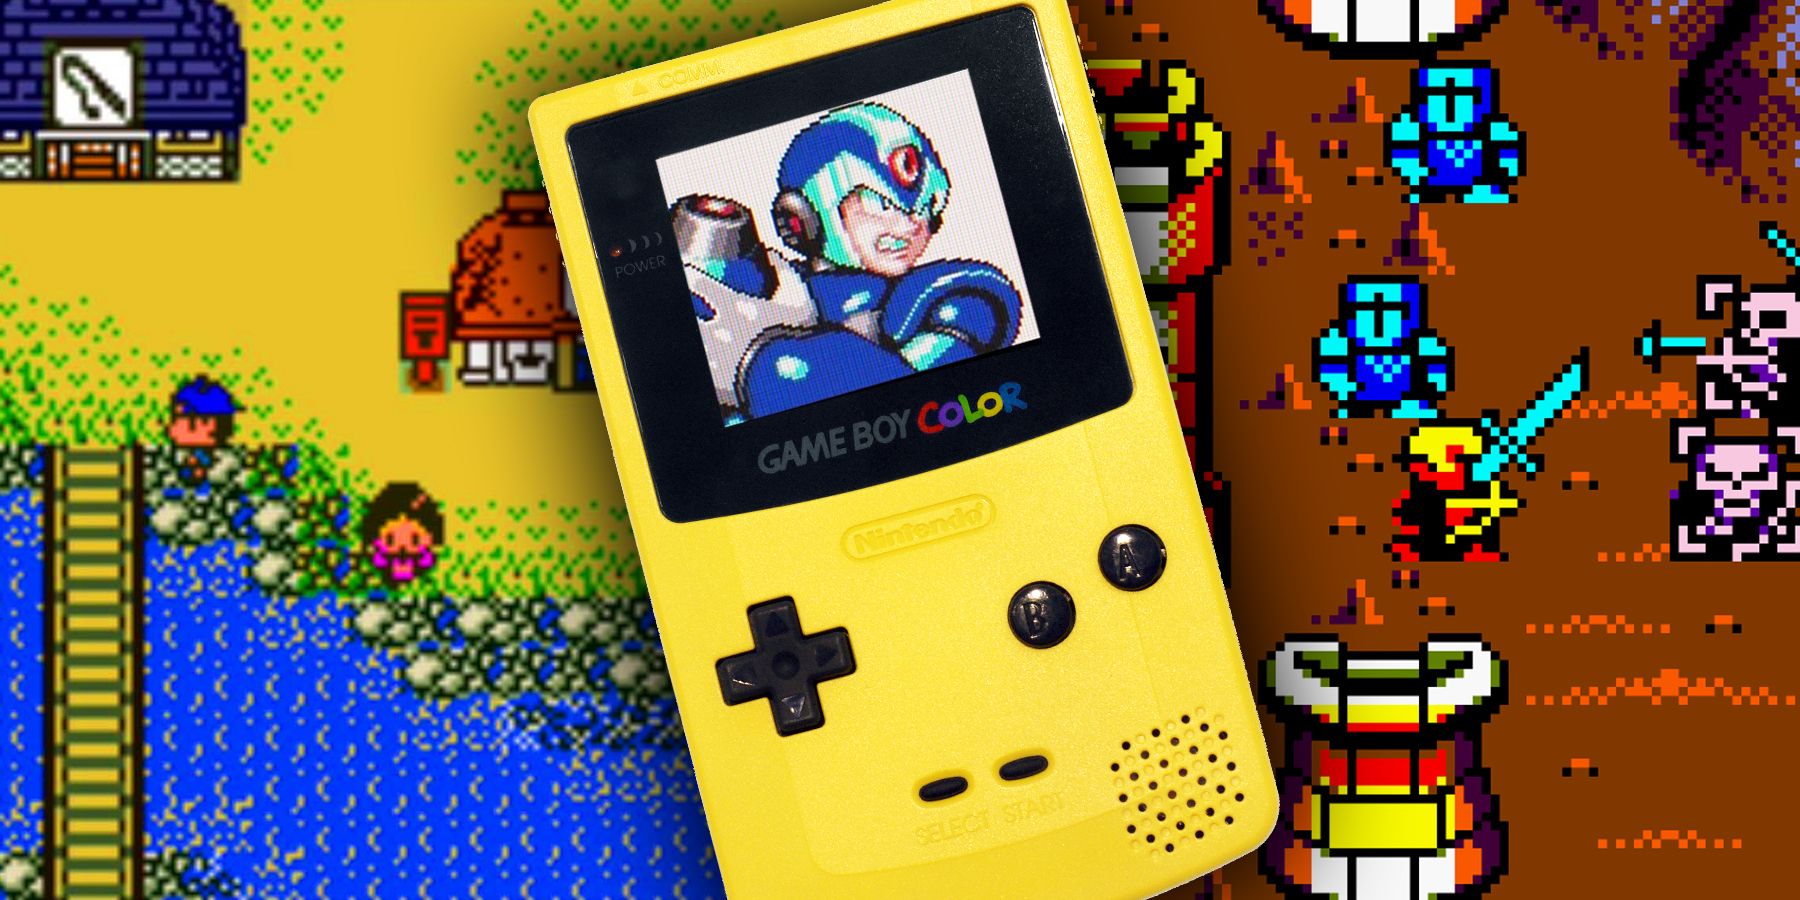 Game boy color - Video games & consoles